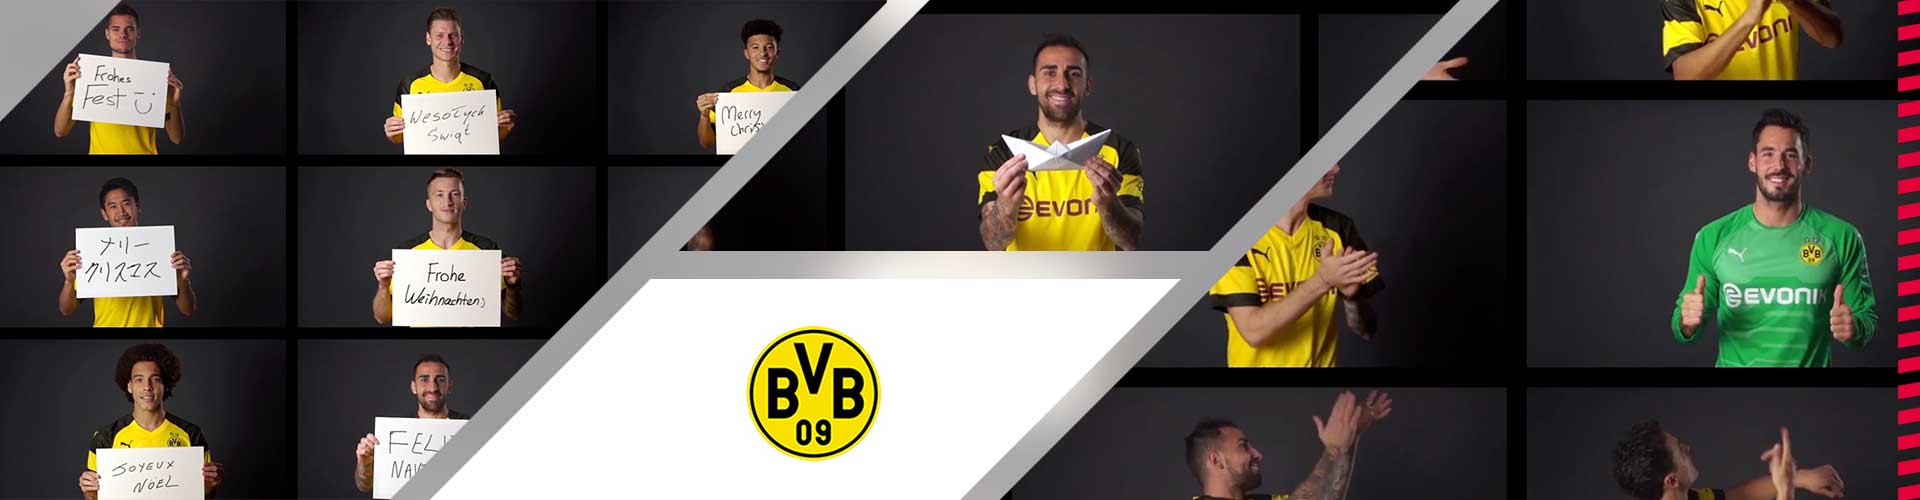 Borussia Dortmund Referenz